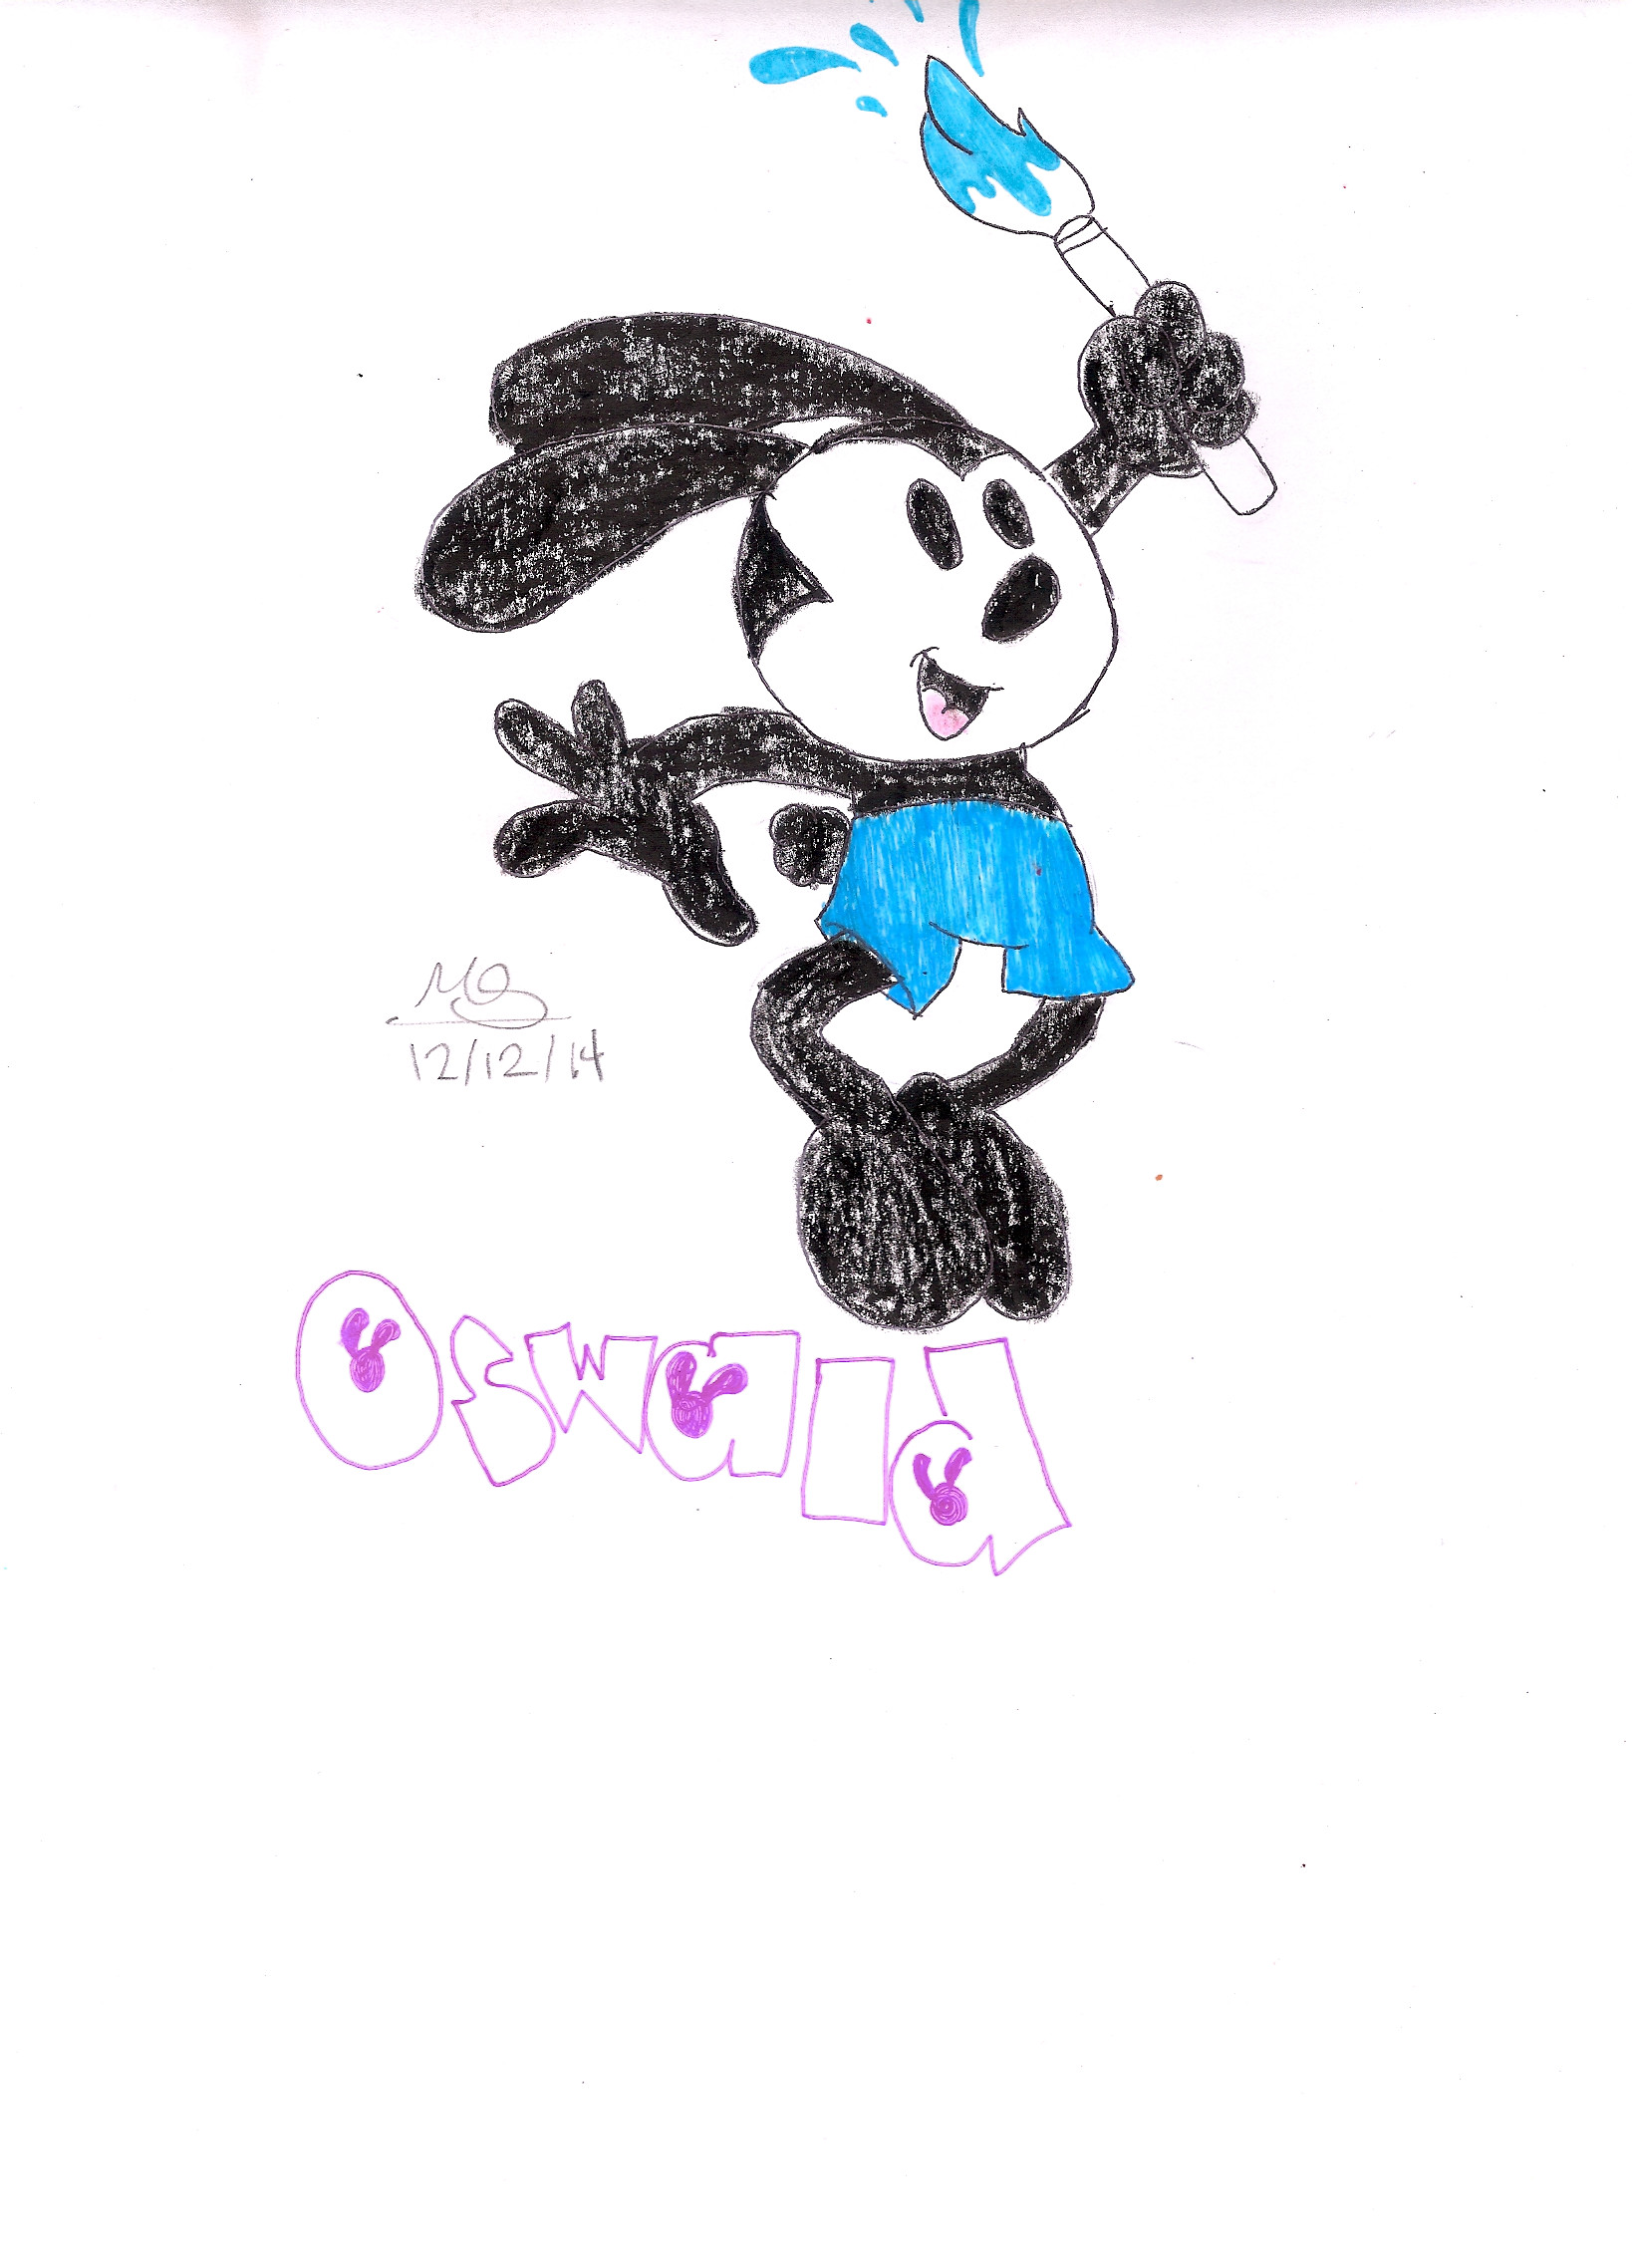 Oswald by DisneyFangirl